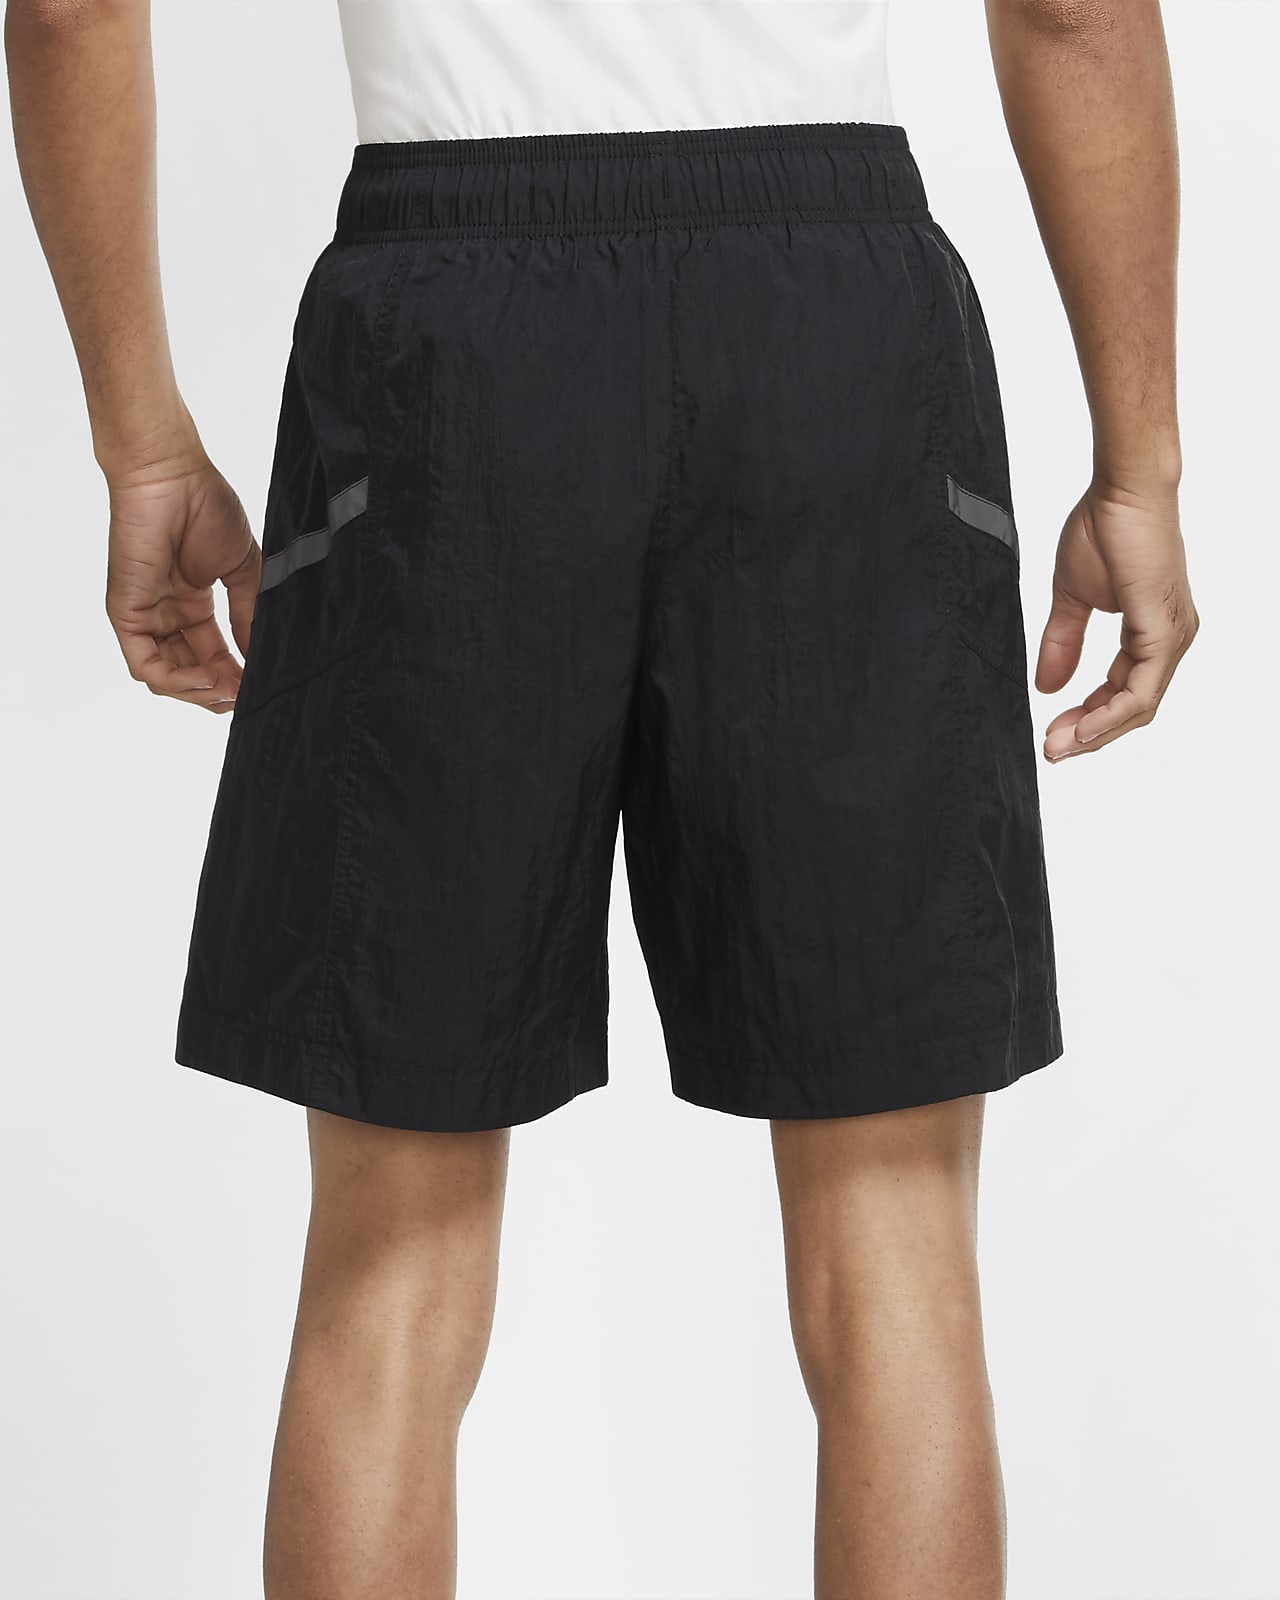 Nike Sportswear Heritage Men's Gym Shorts.